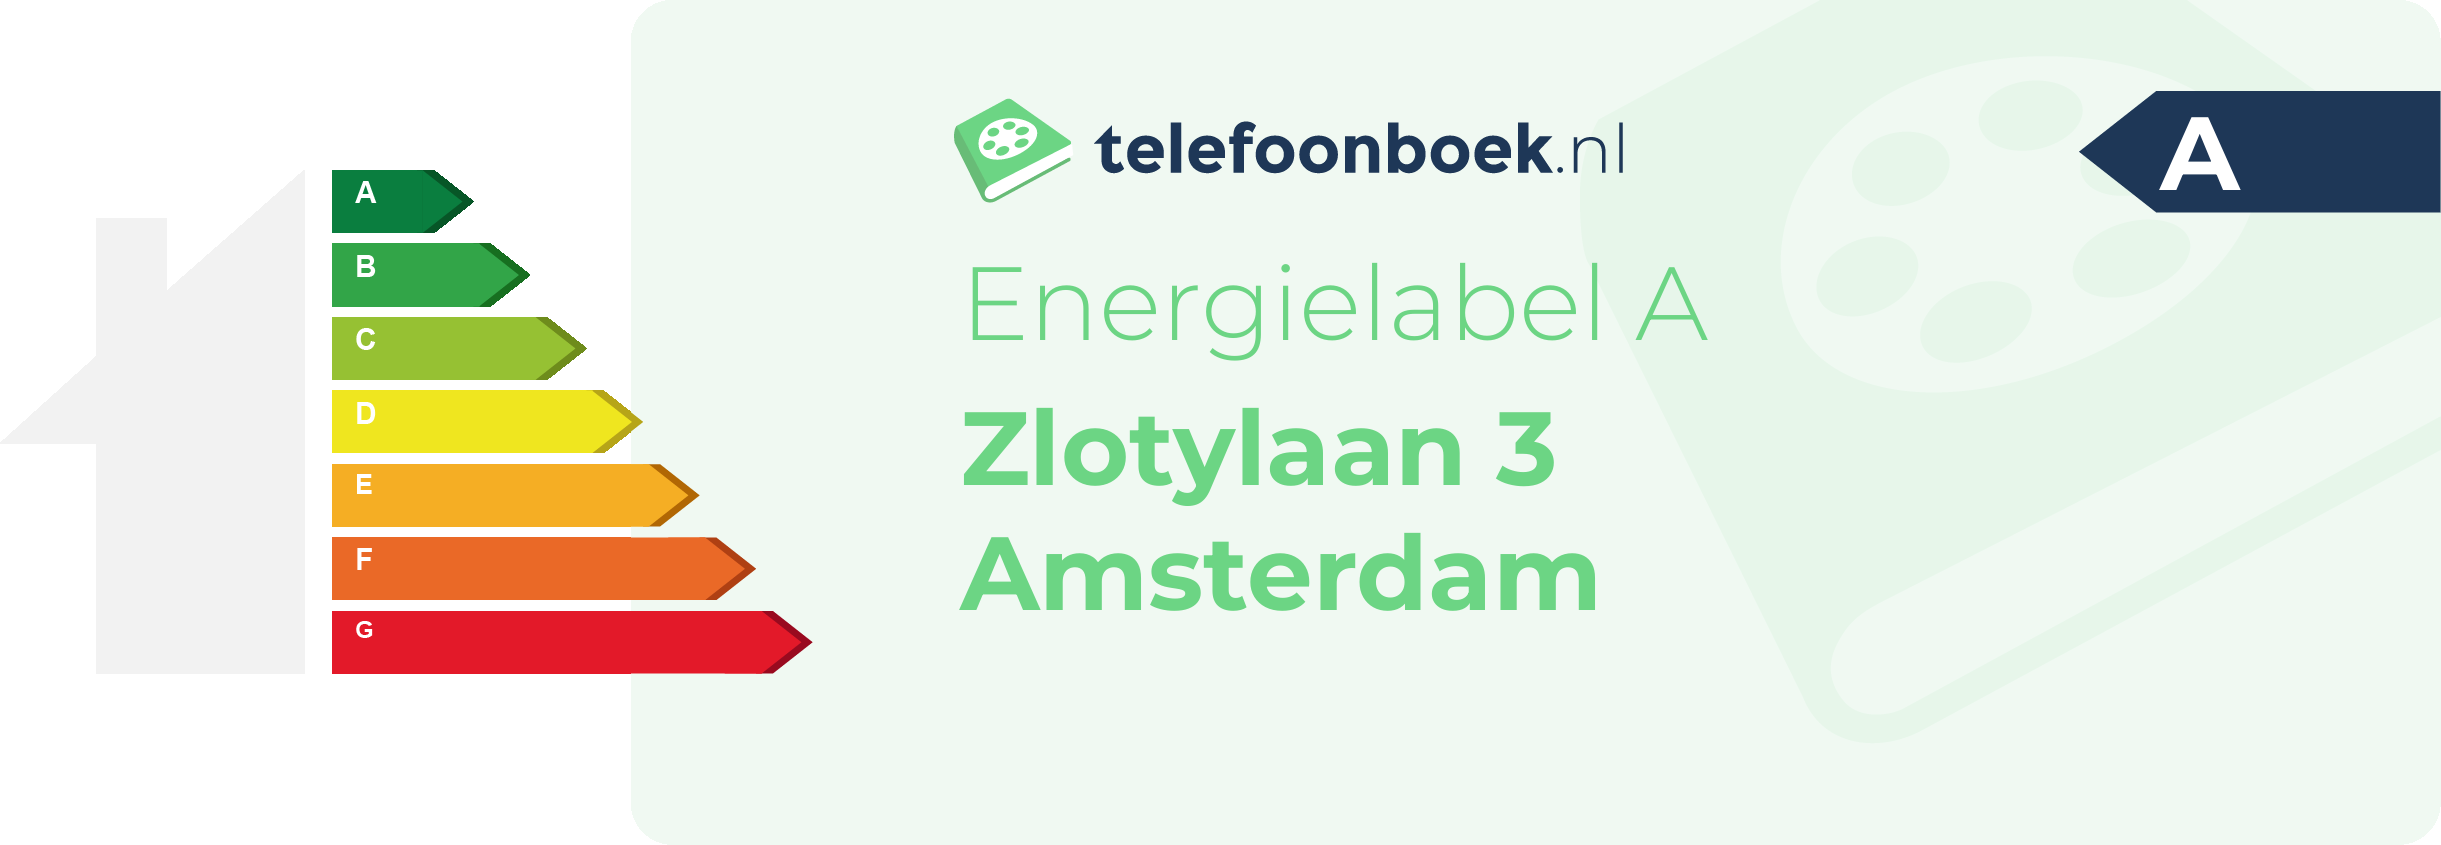 Energielabel Zlotylaan 3 Amsterdam